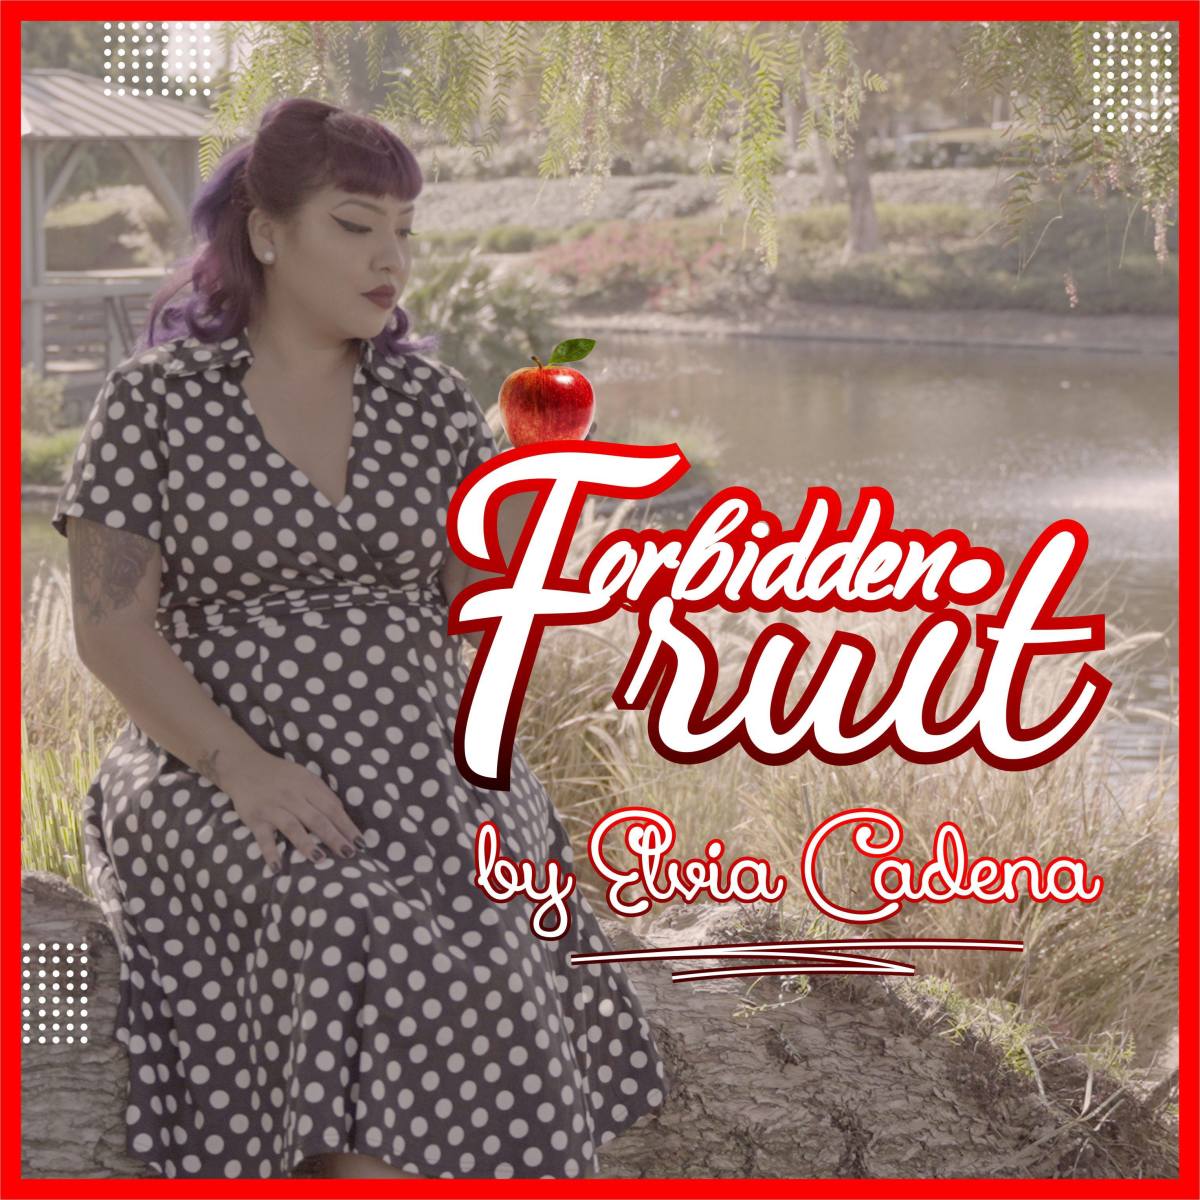 The Cover art for her new single, “Forbidden Fruit”